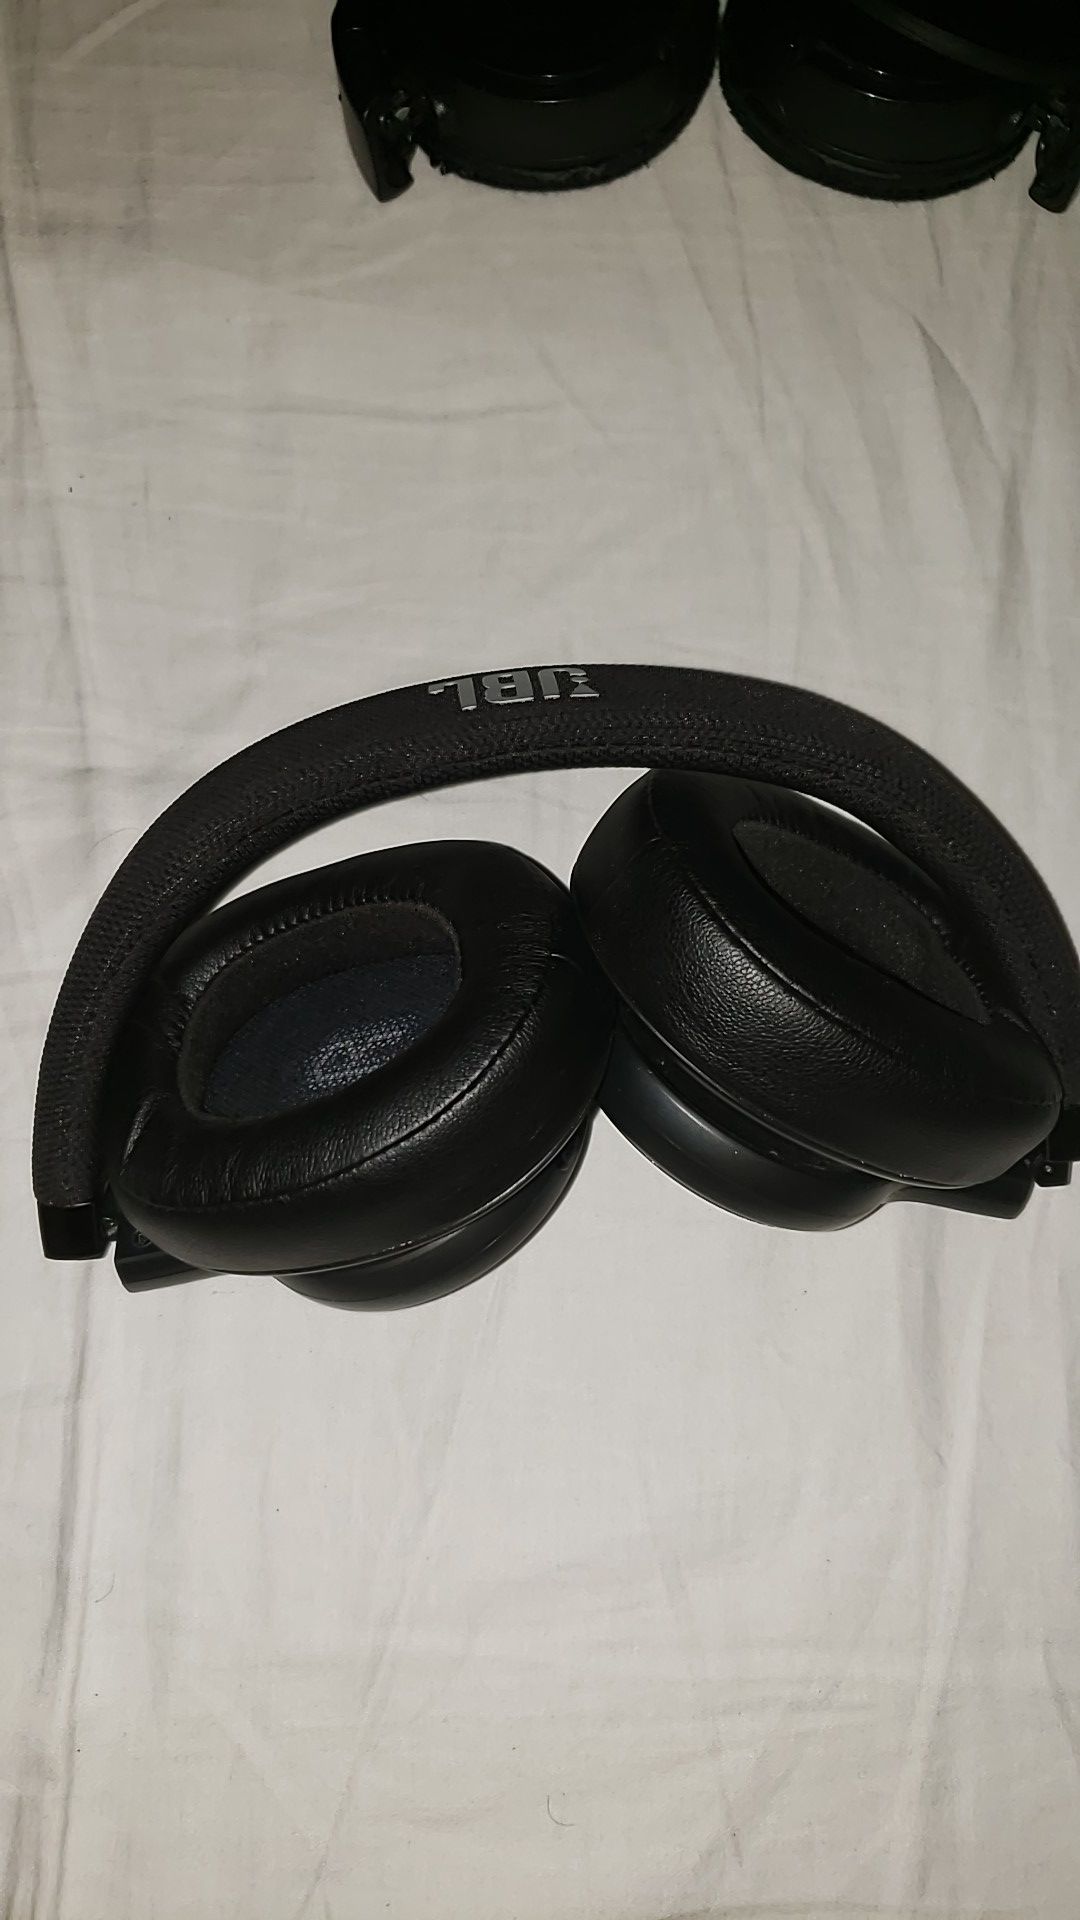 JBL wireless Headphones